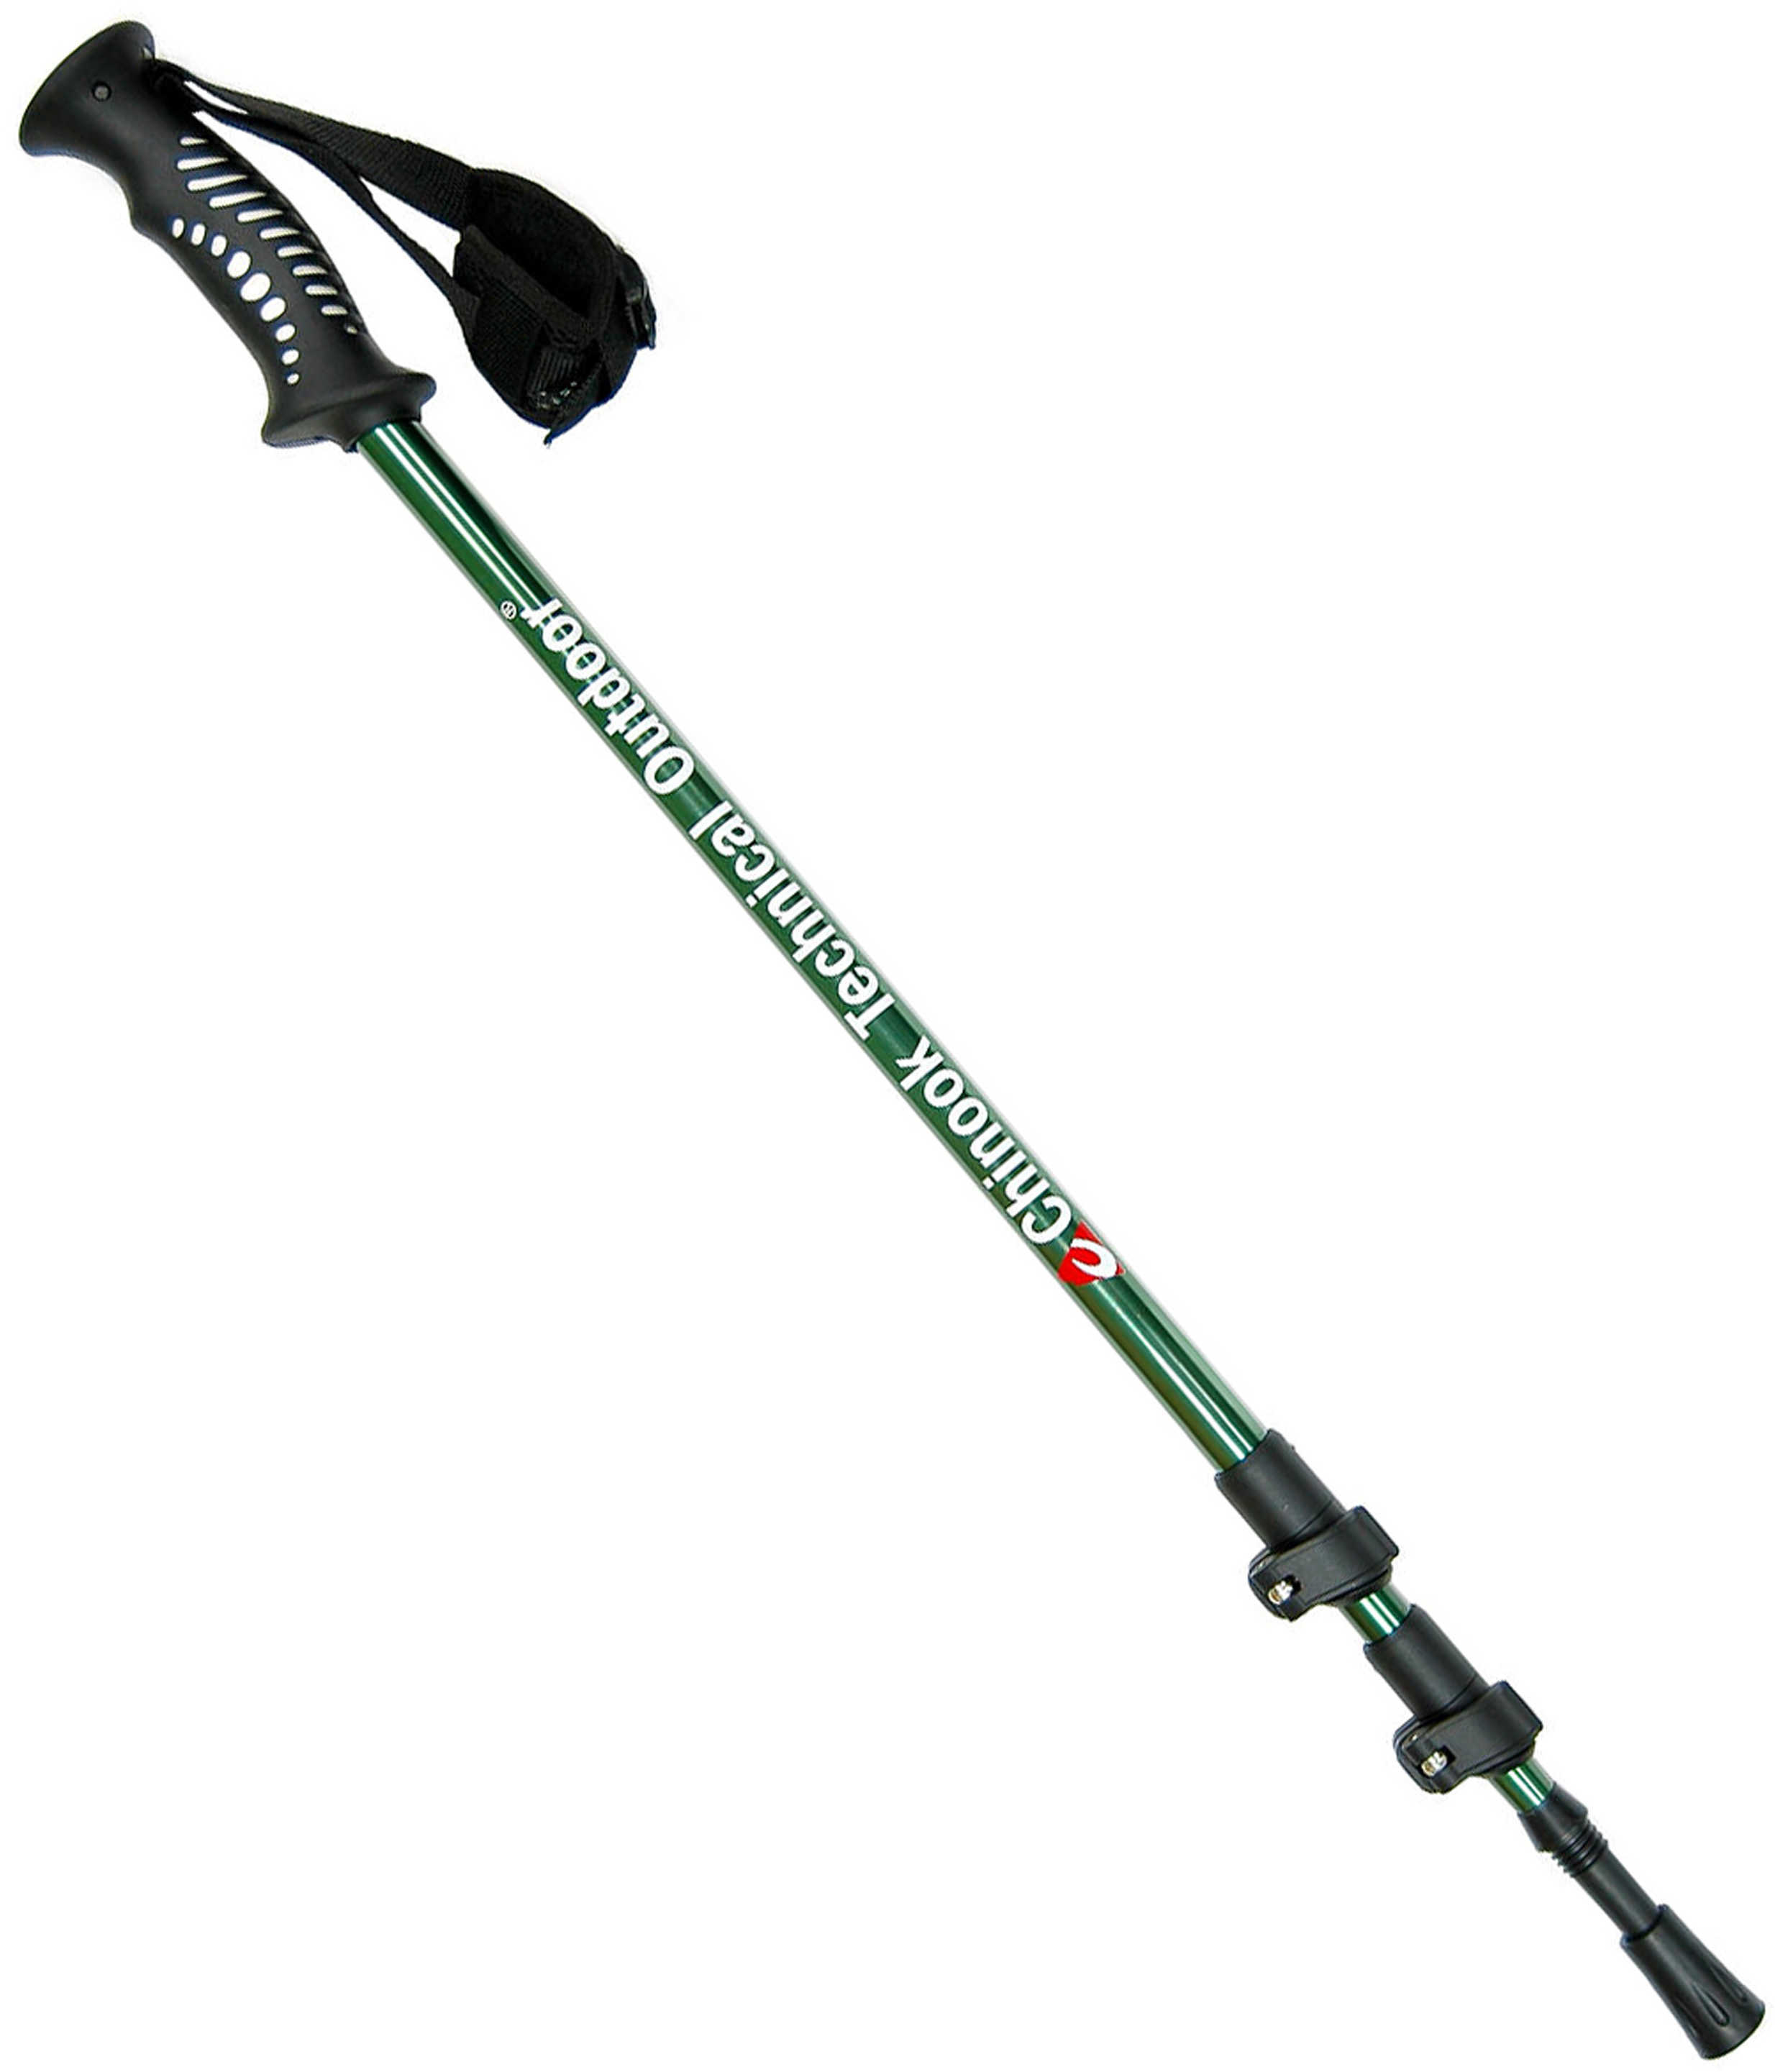 Chinook Adjustable Hiking/Skiing Pole Backcountry 3 (Single) Md: 51028